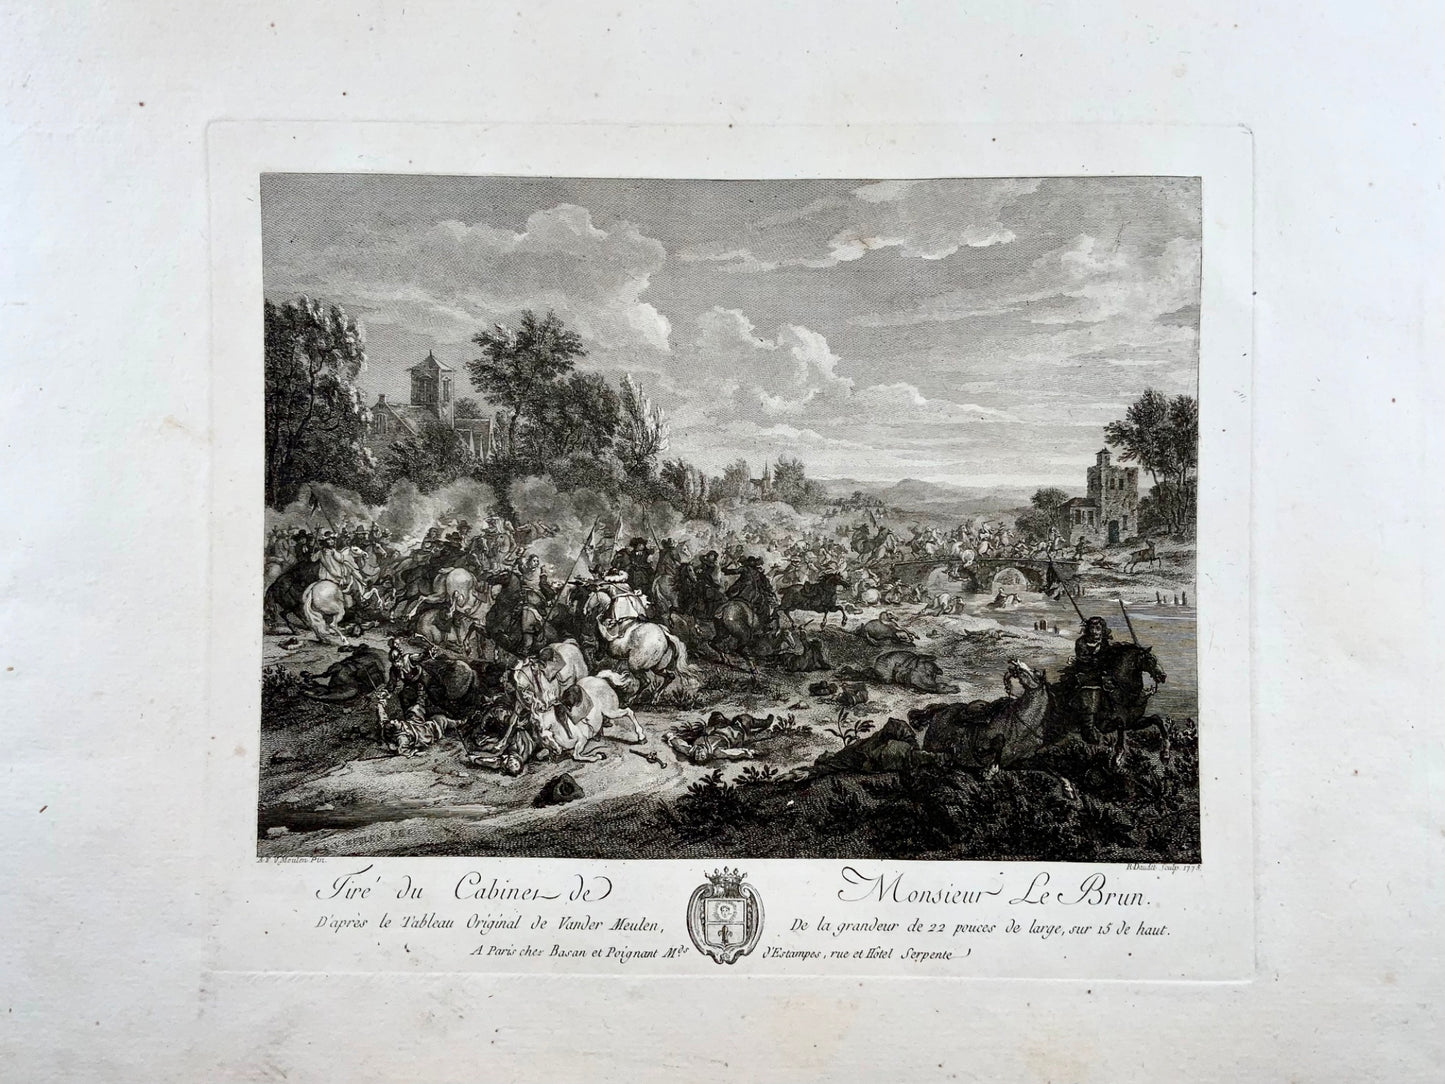 1775 Battle, French cavalry attack, van der Meulen del, Master Engraving